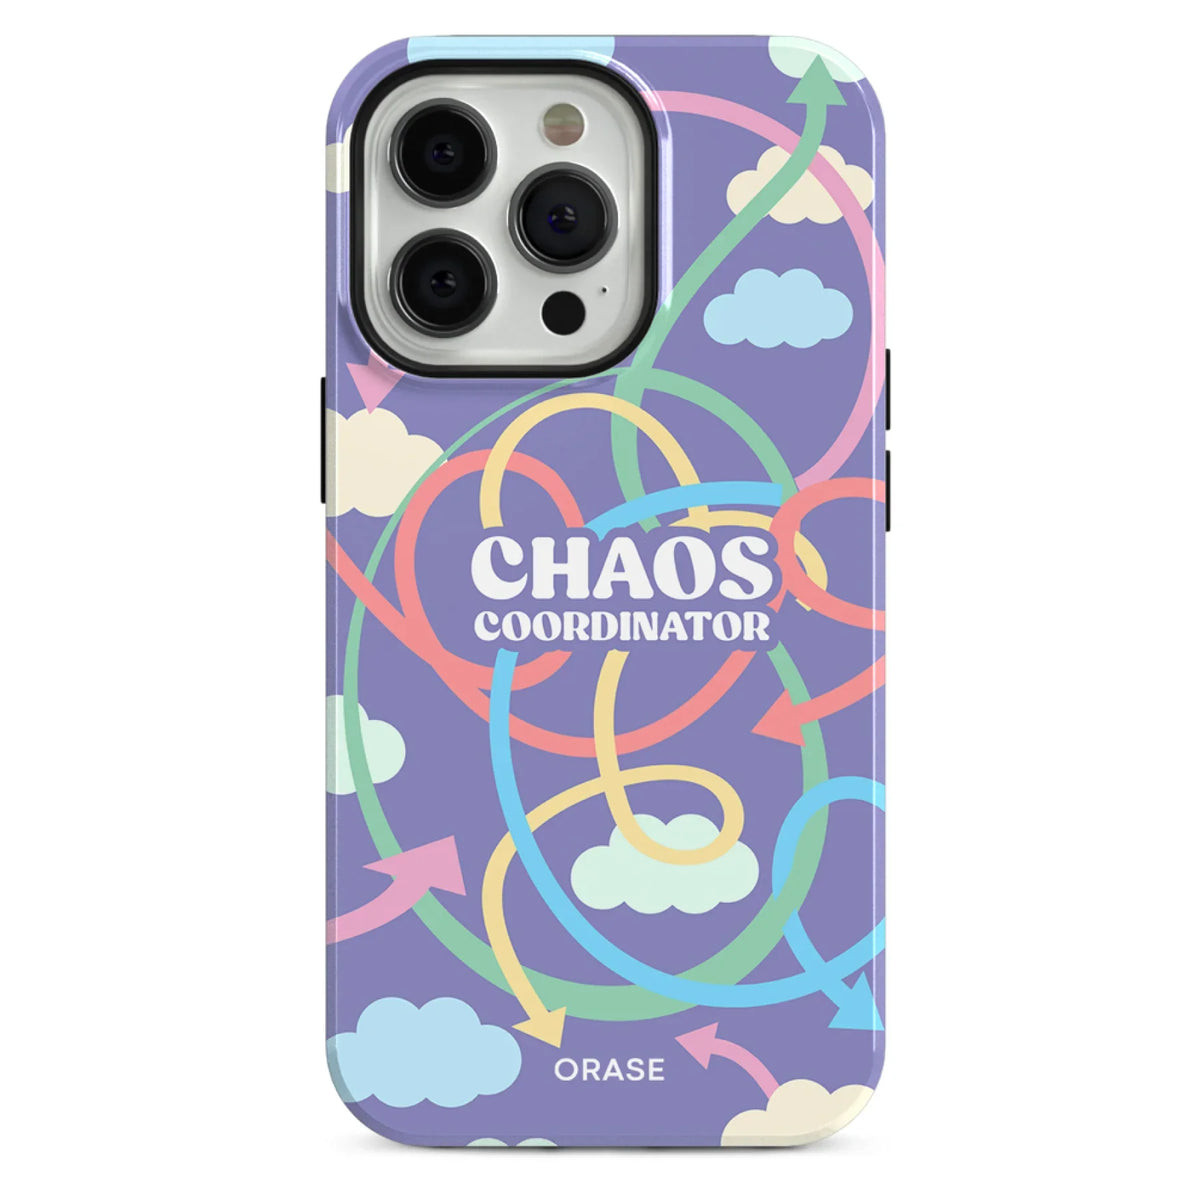 Chaos Coordinator iPhone Case - iPhone 11